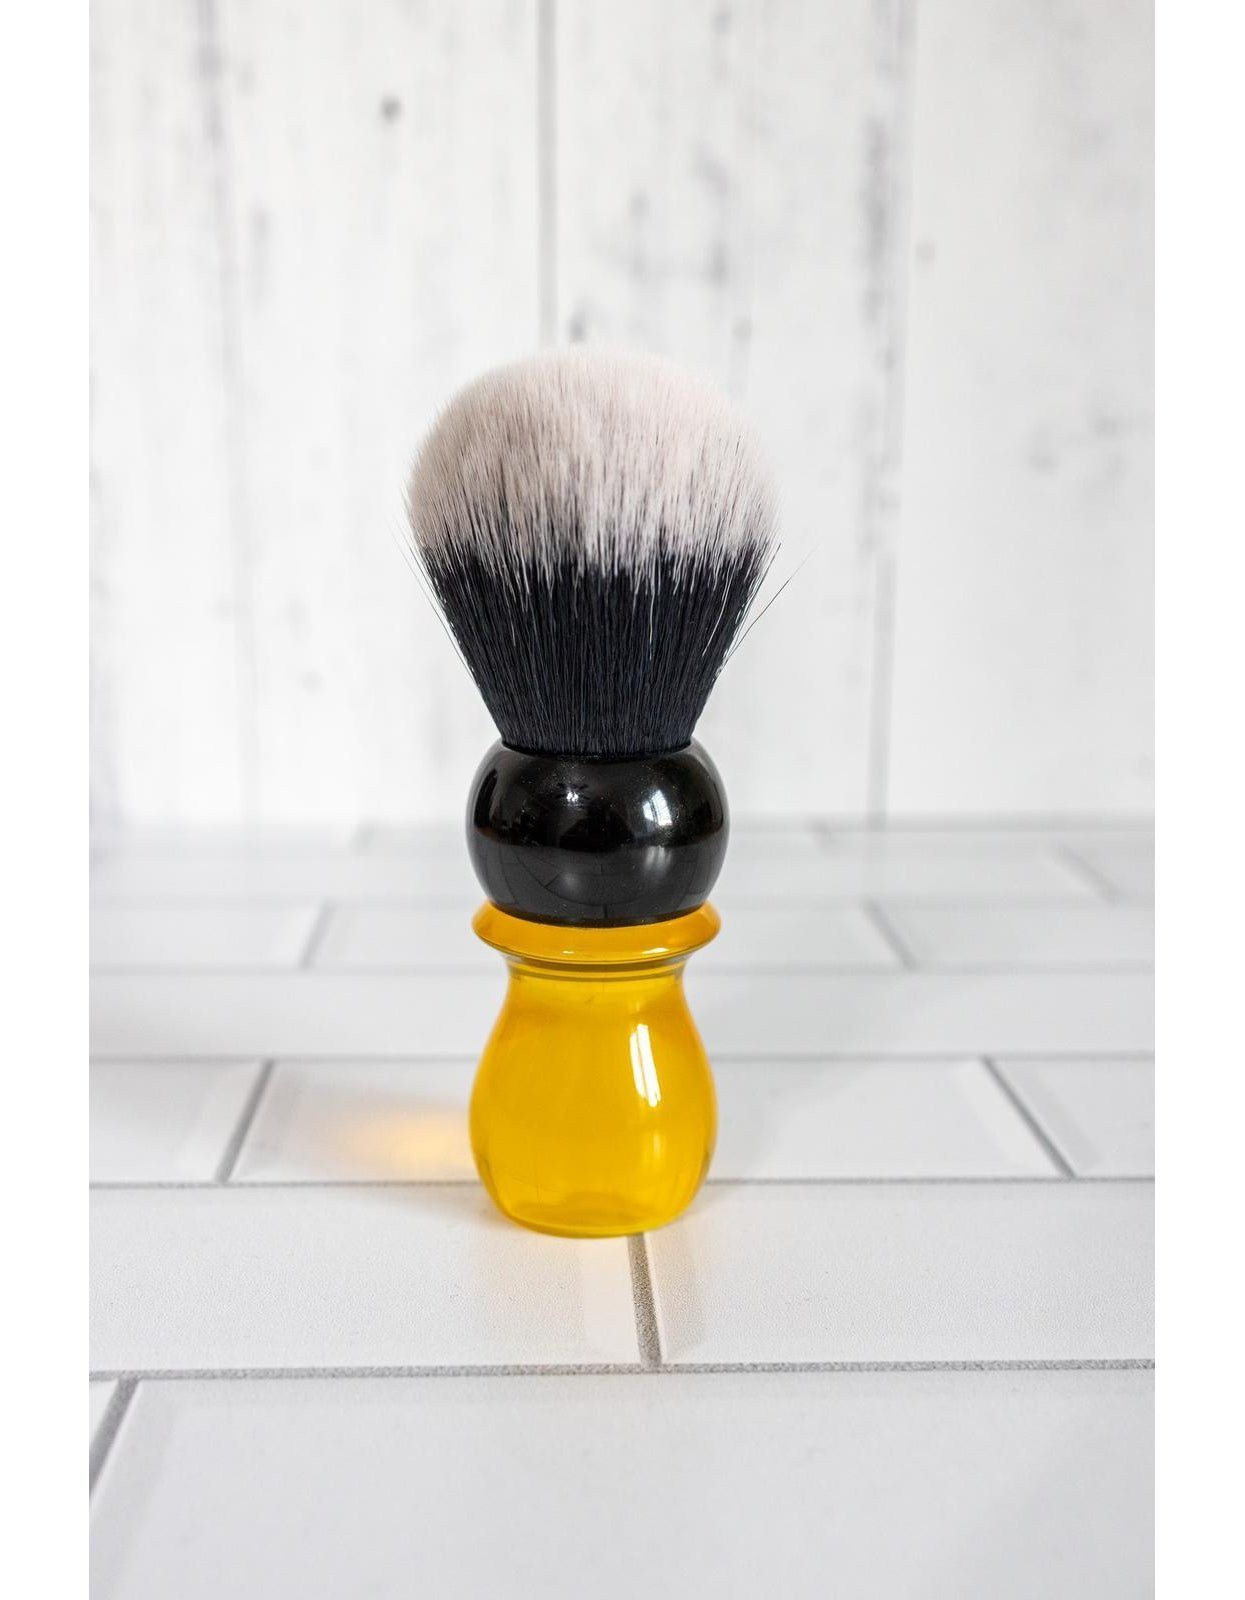 Product image 1 for WCS Two-Tone Tall Tuxedo Shaving Brush, Yellow & Black